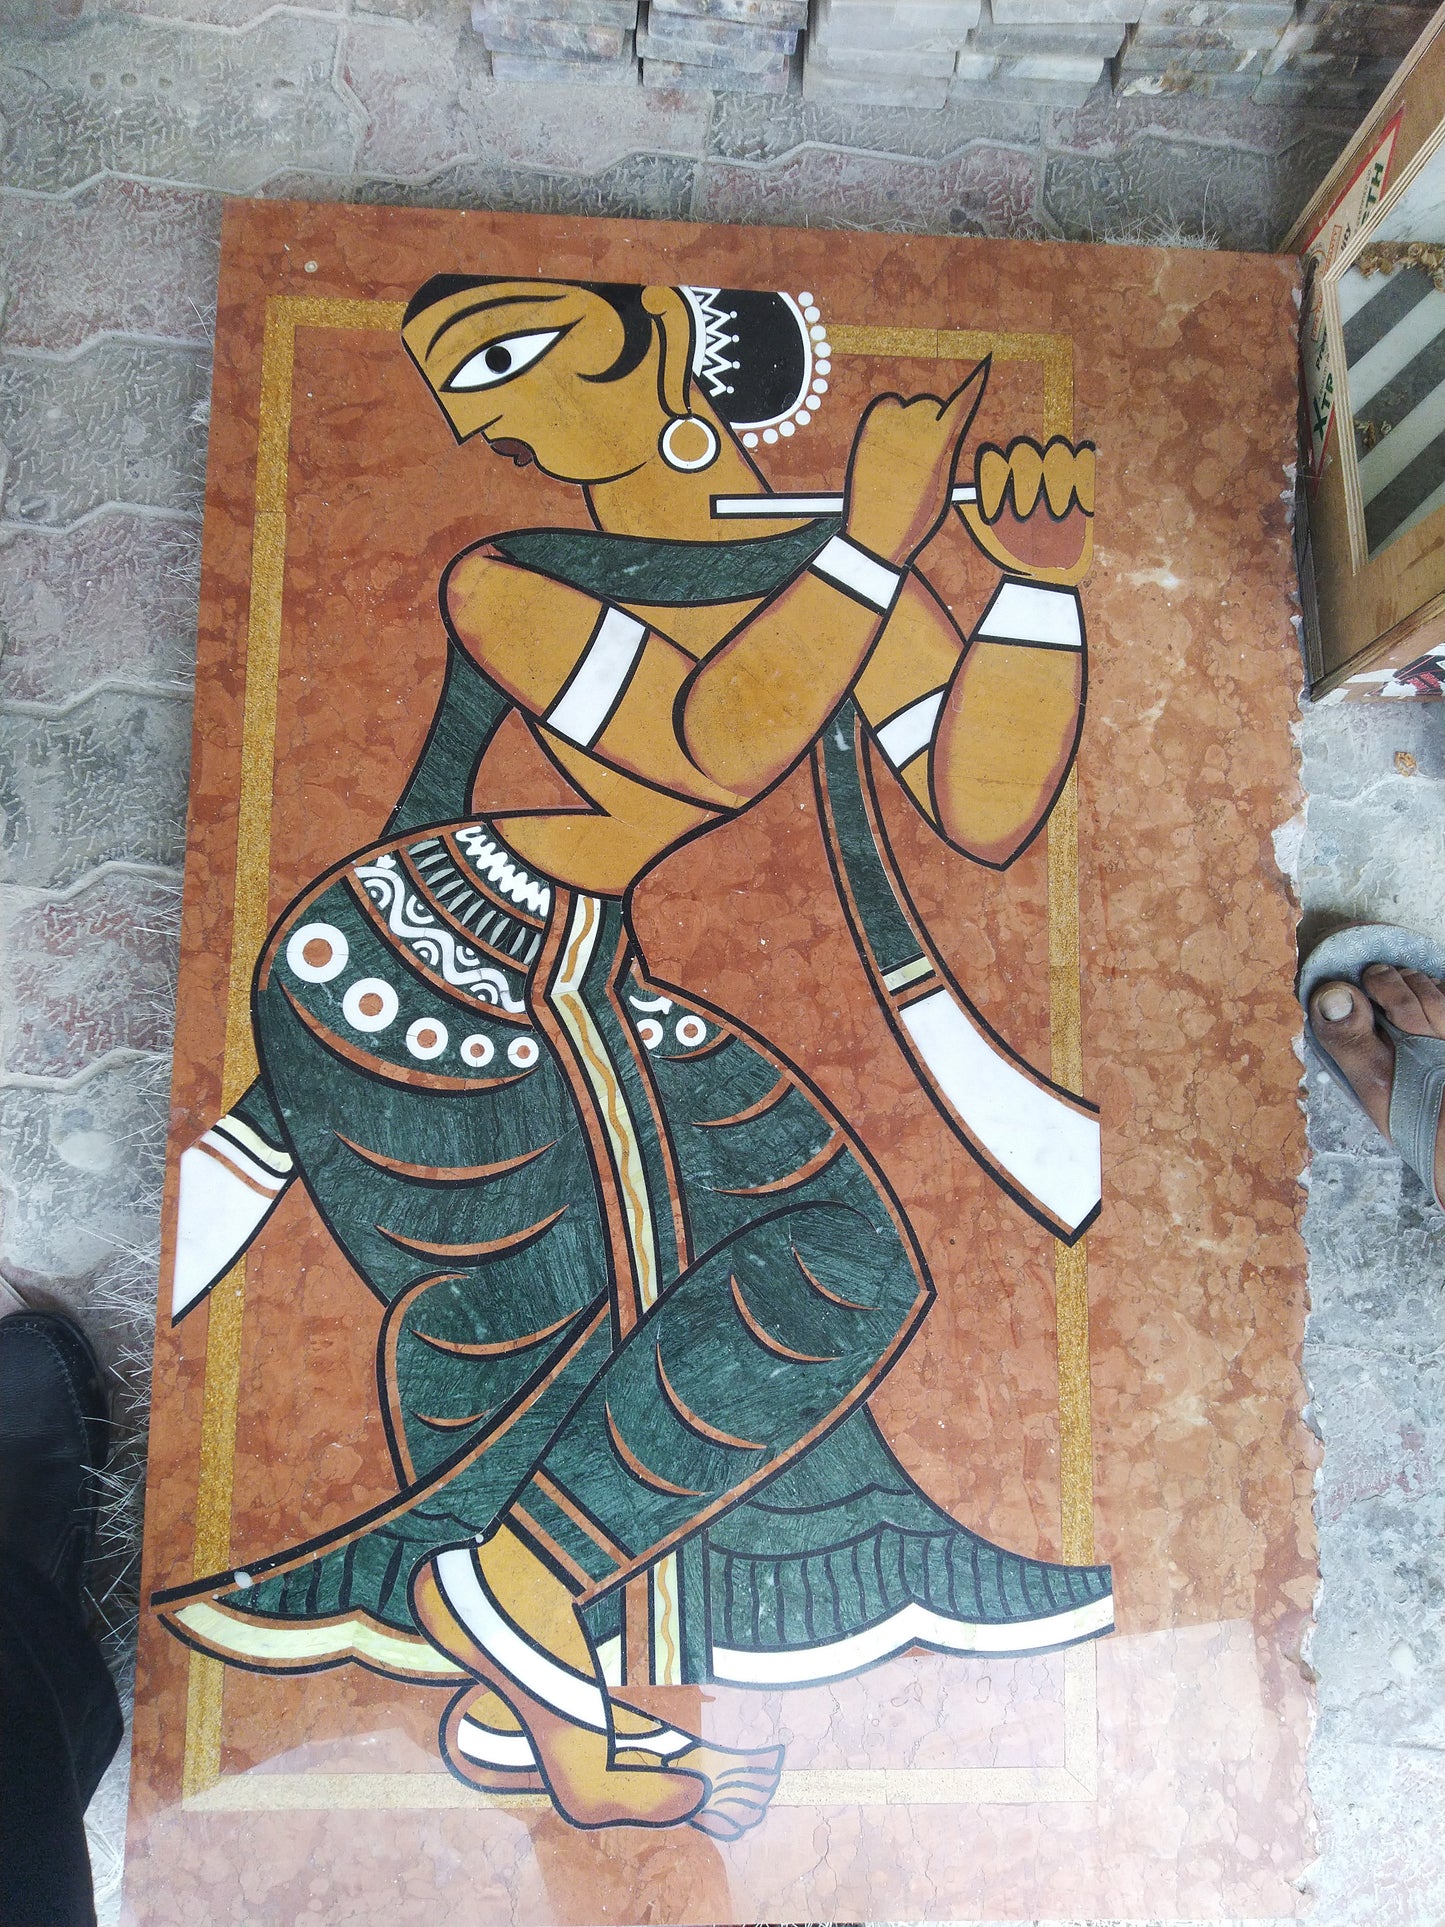 Stone Plus India Marble Inlay Wall mural/ Jamini Roy Art Work / Gopini Dancing